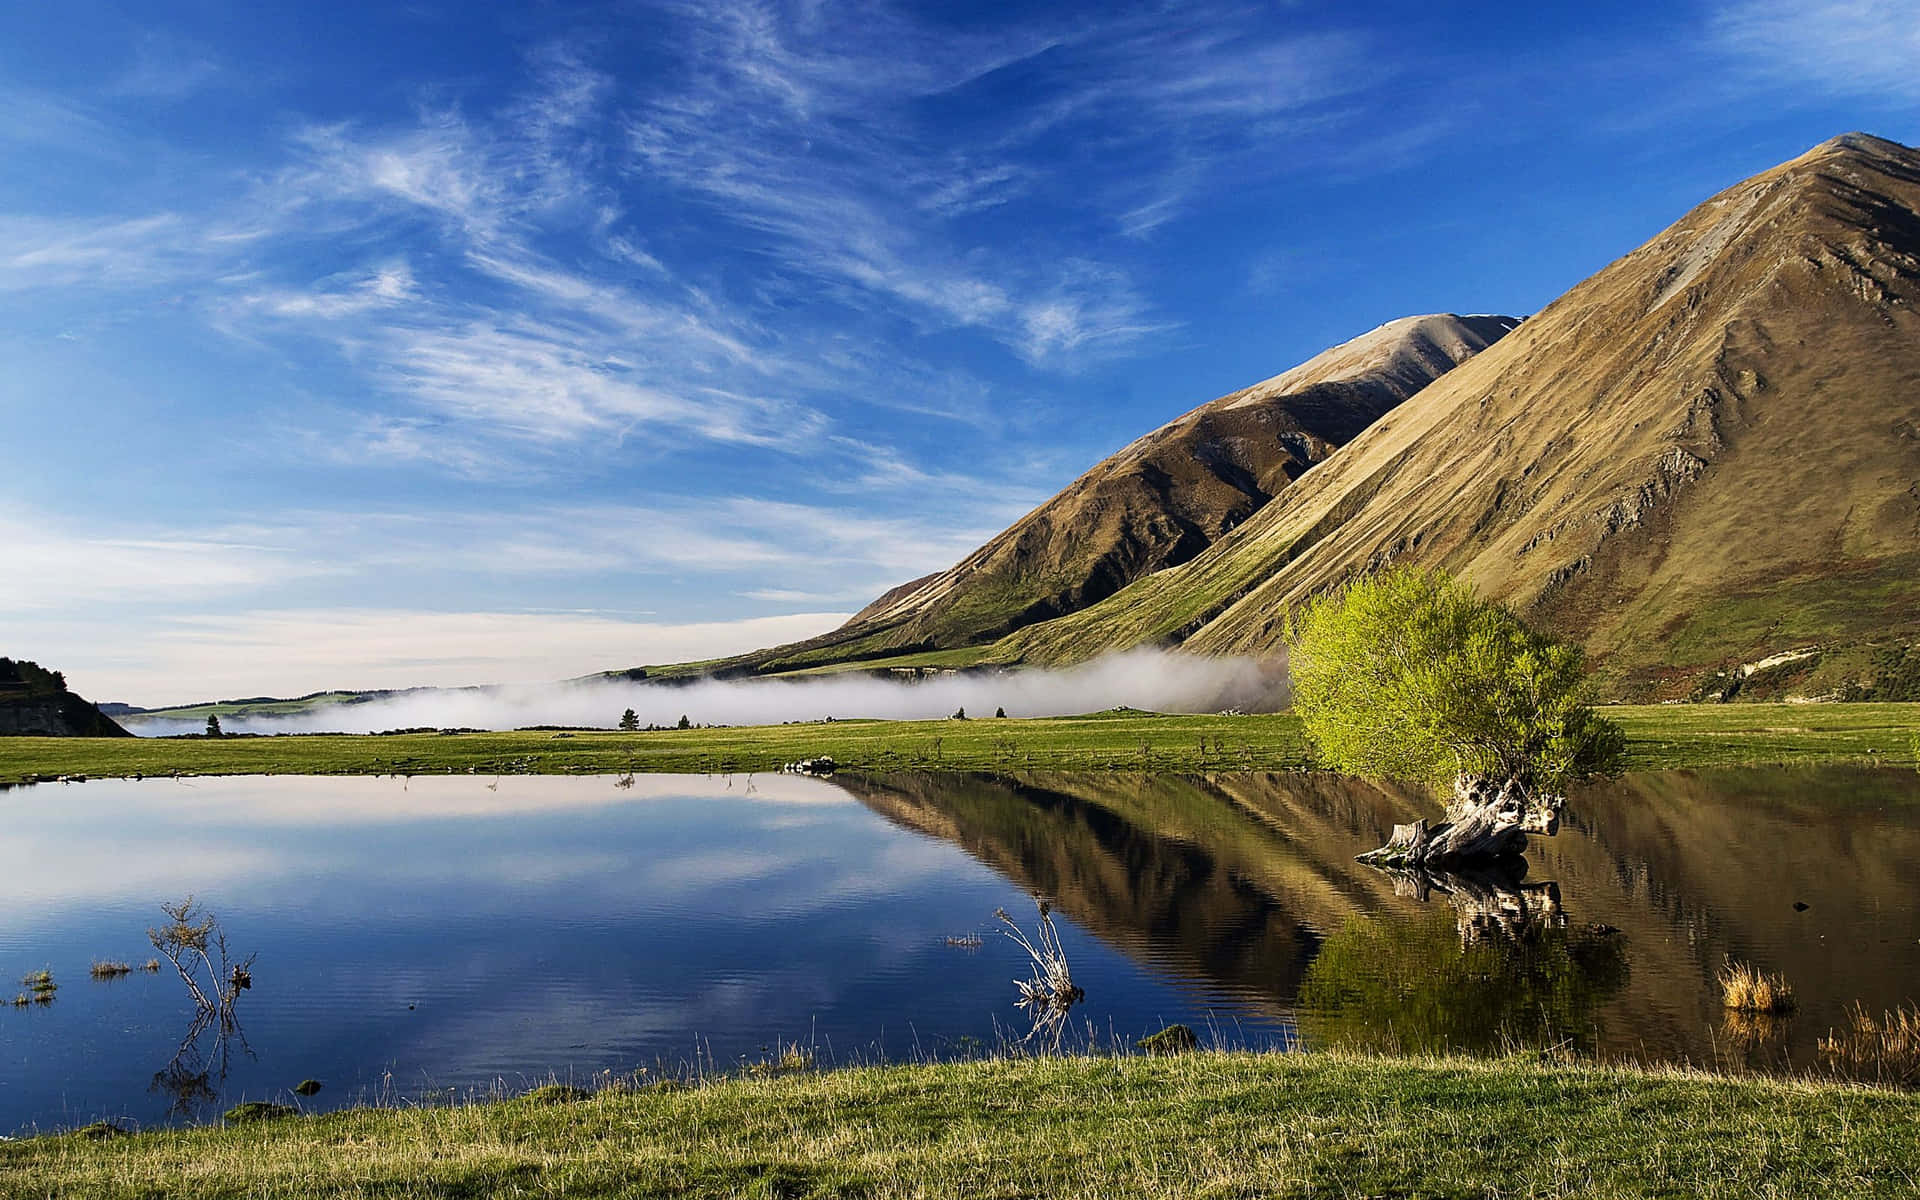 Enjoying the breathtaking beauty of New Zealand